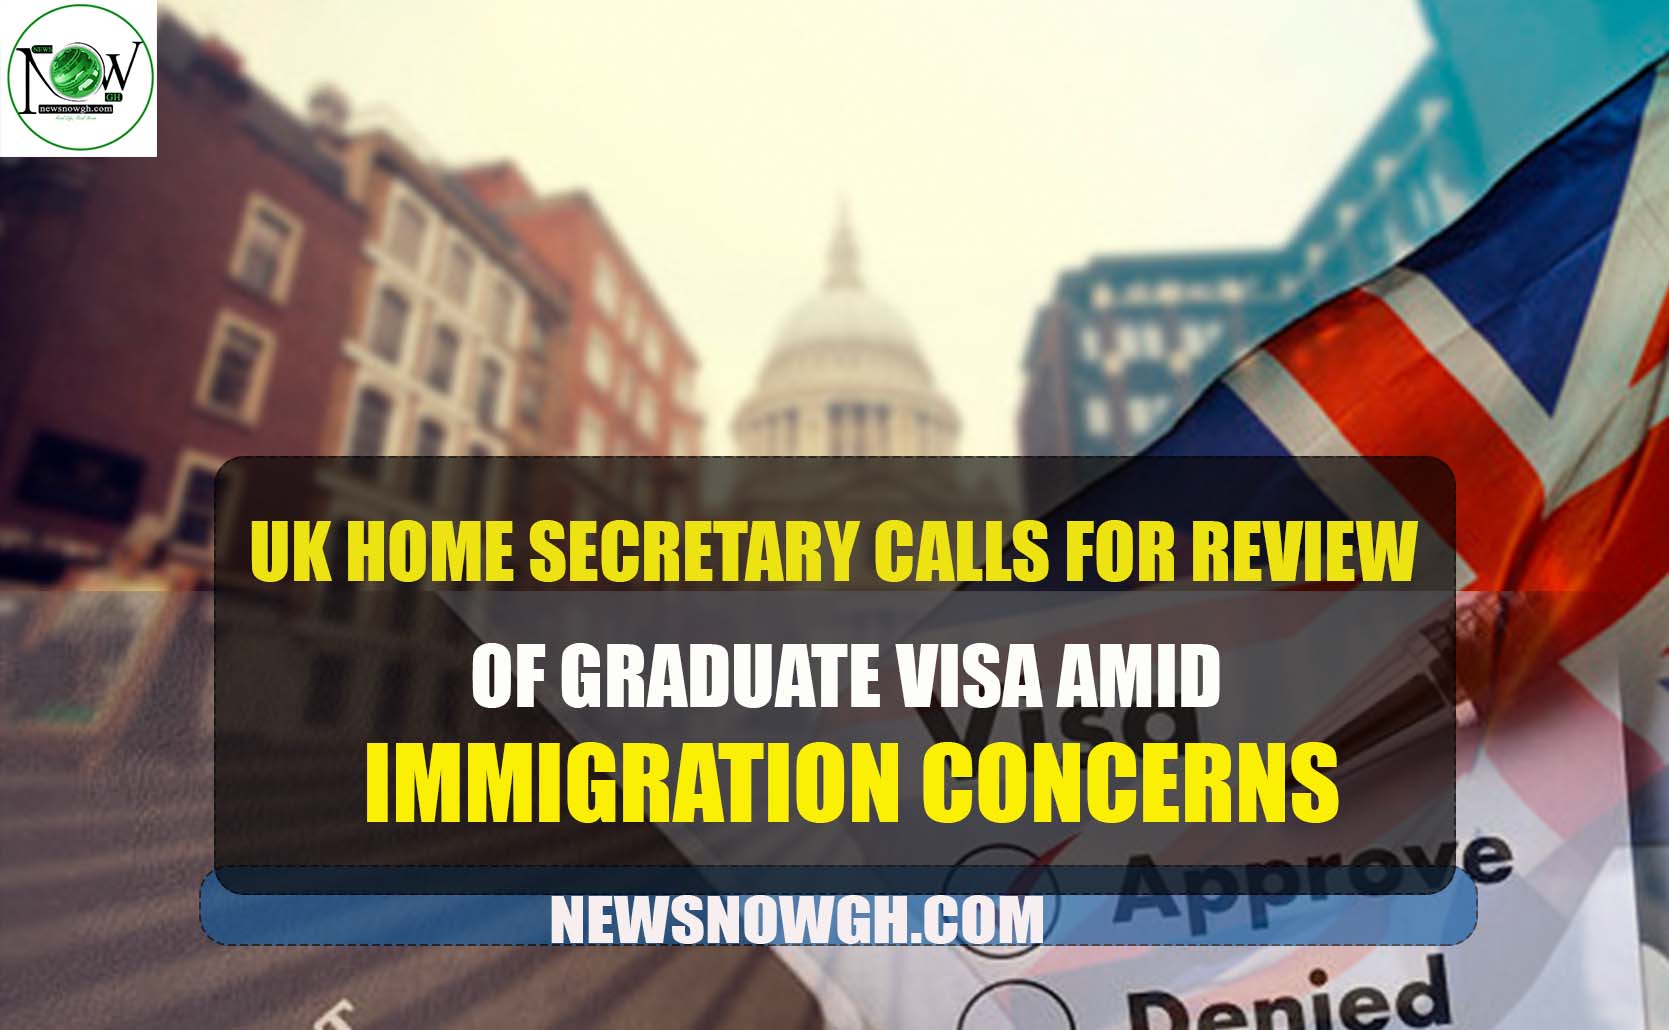 UK Home Secretary Calls For Review of Graduate Visa Amid Immigration Concerns